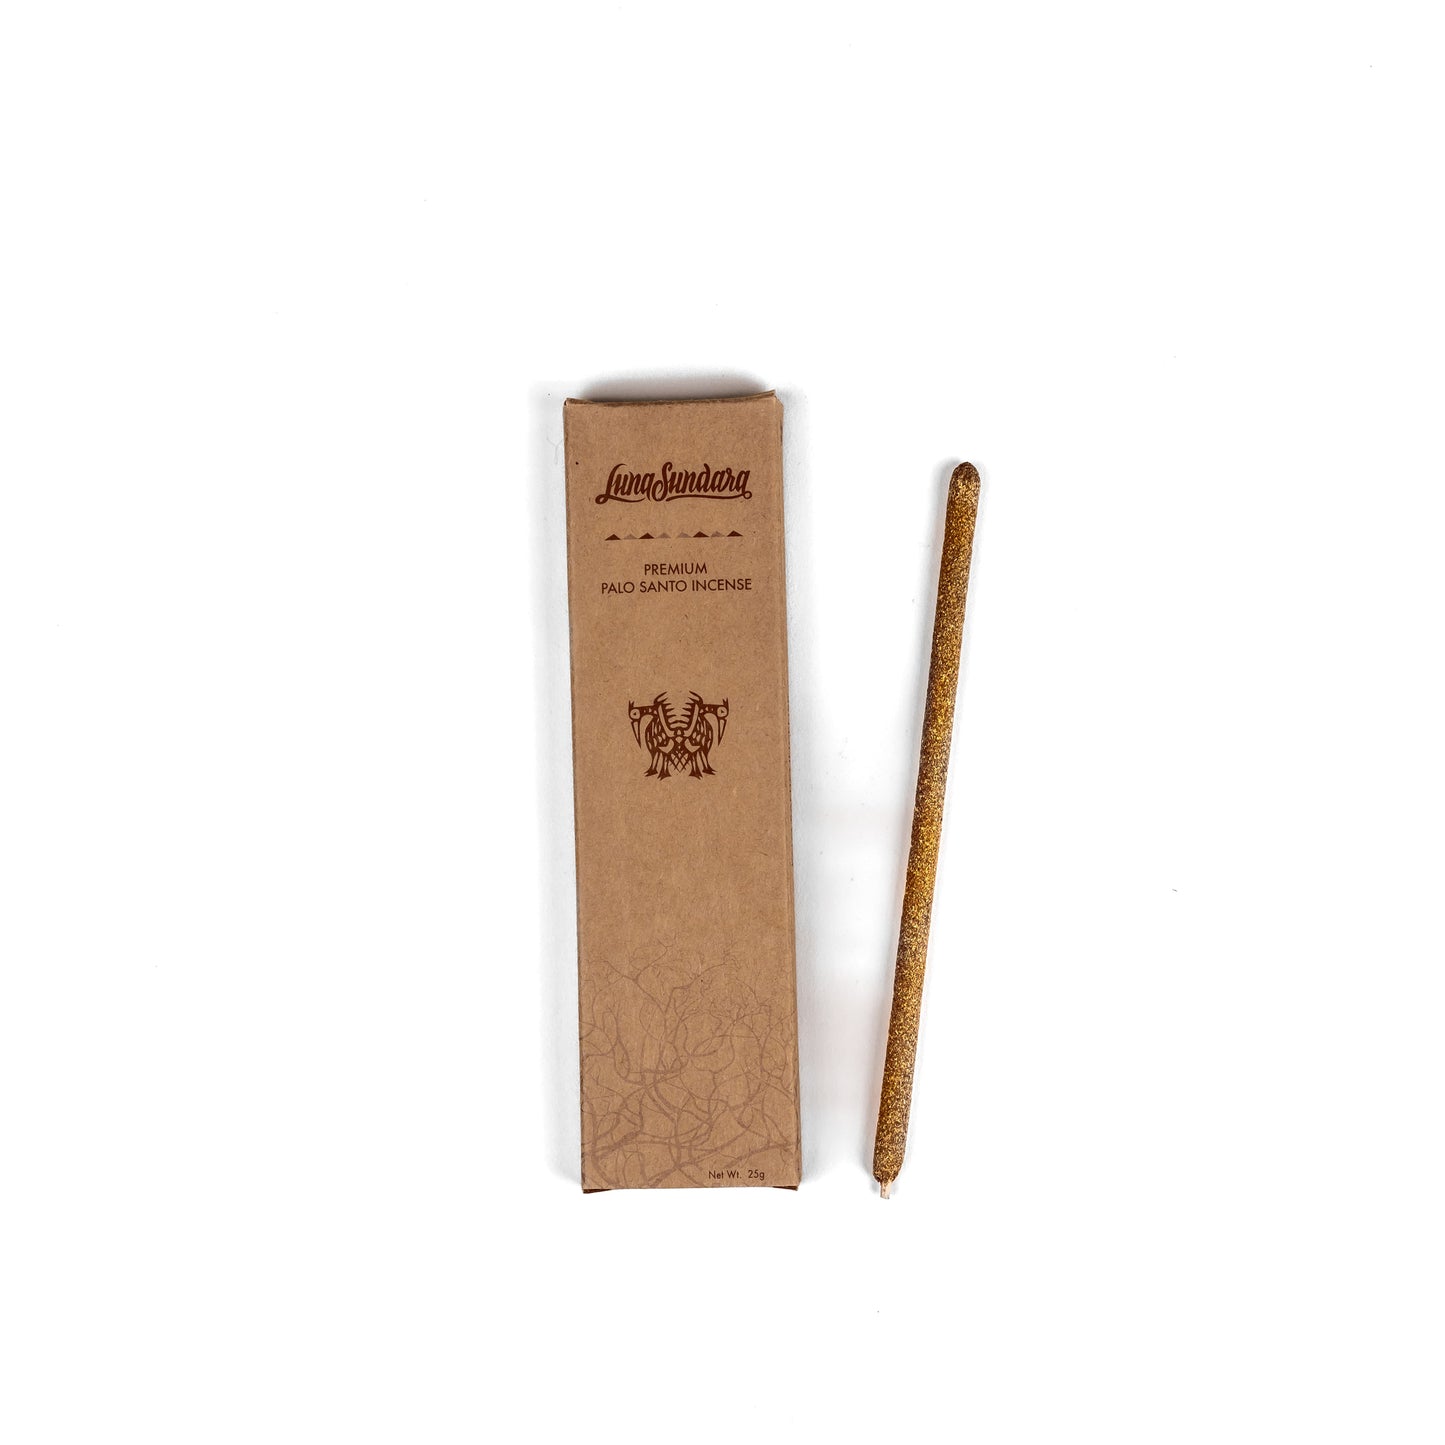 Premium Palo Santo Hand-Rolled Incense Sticks from 100% Wild Peruvian Palo Santo